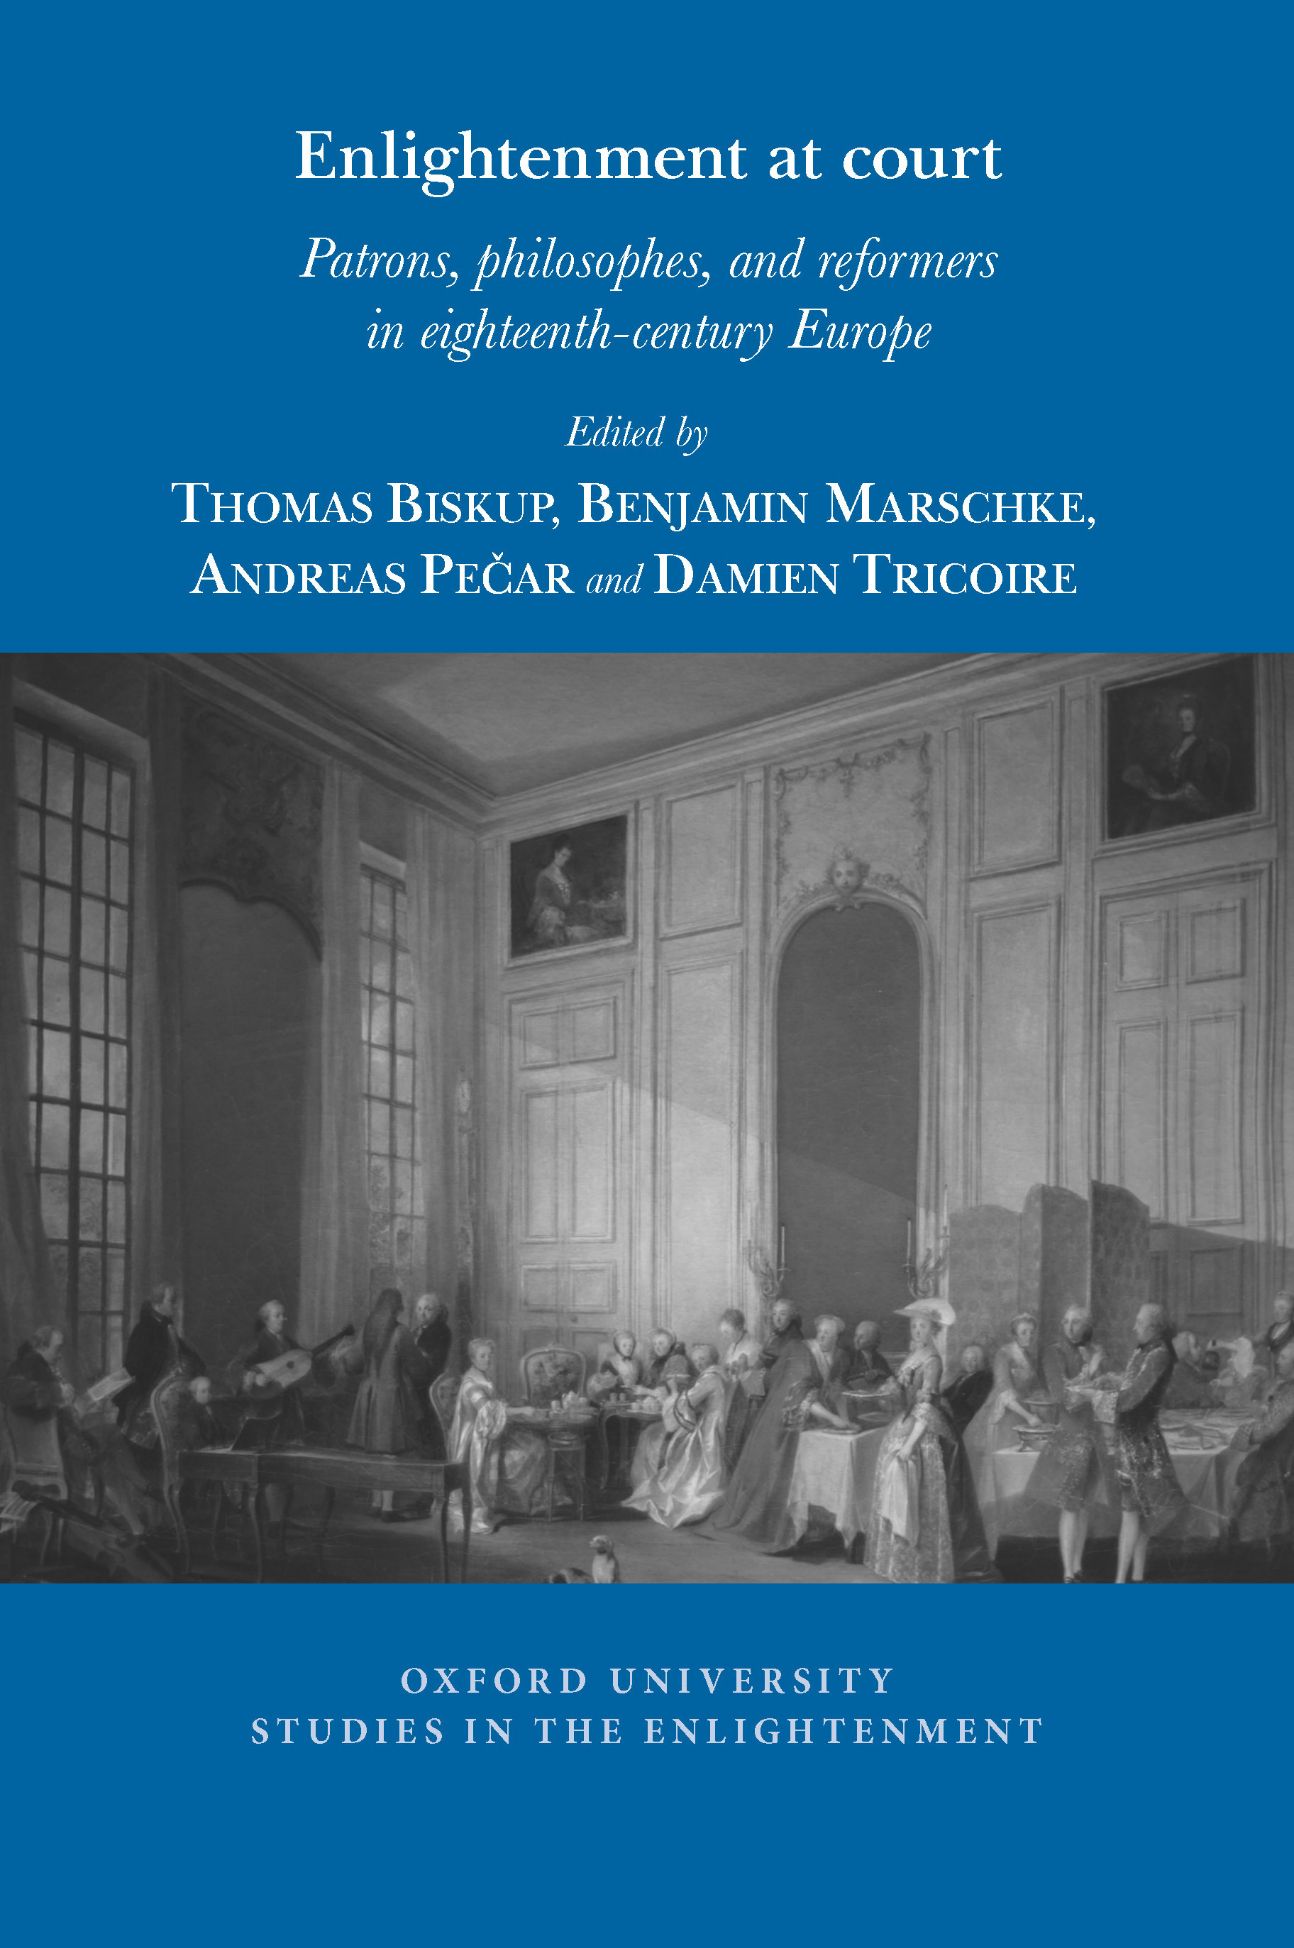 T. Biskup, B. Marschke, A. Pečar, D. Tricoire (dir.), Enlightenment at Court